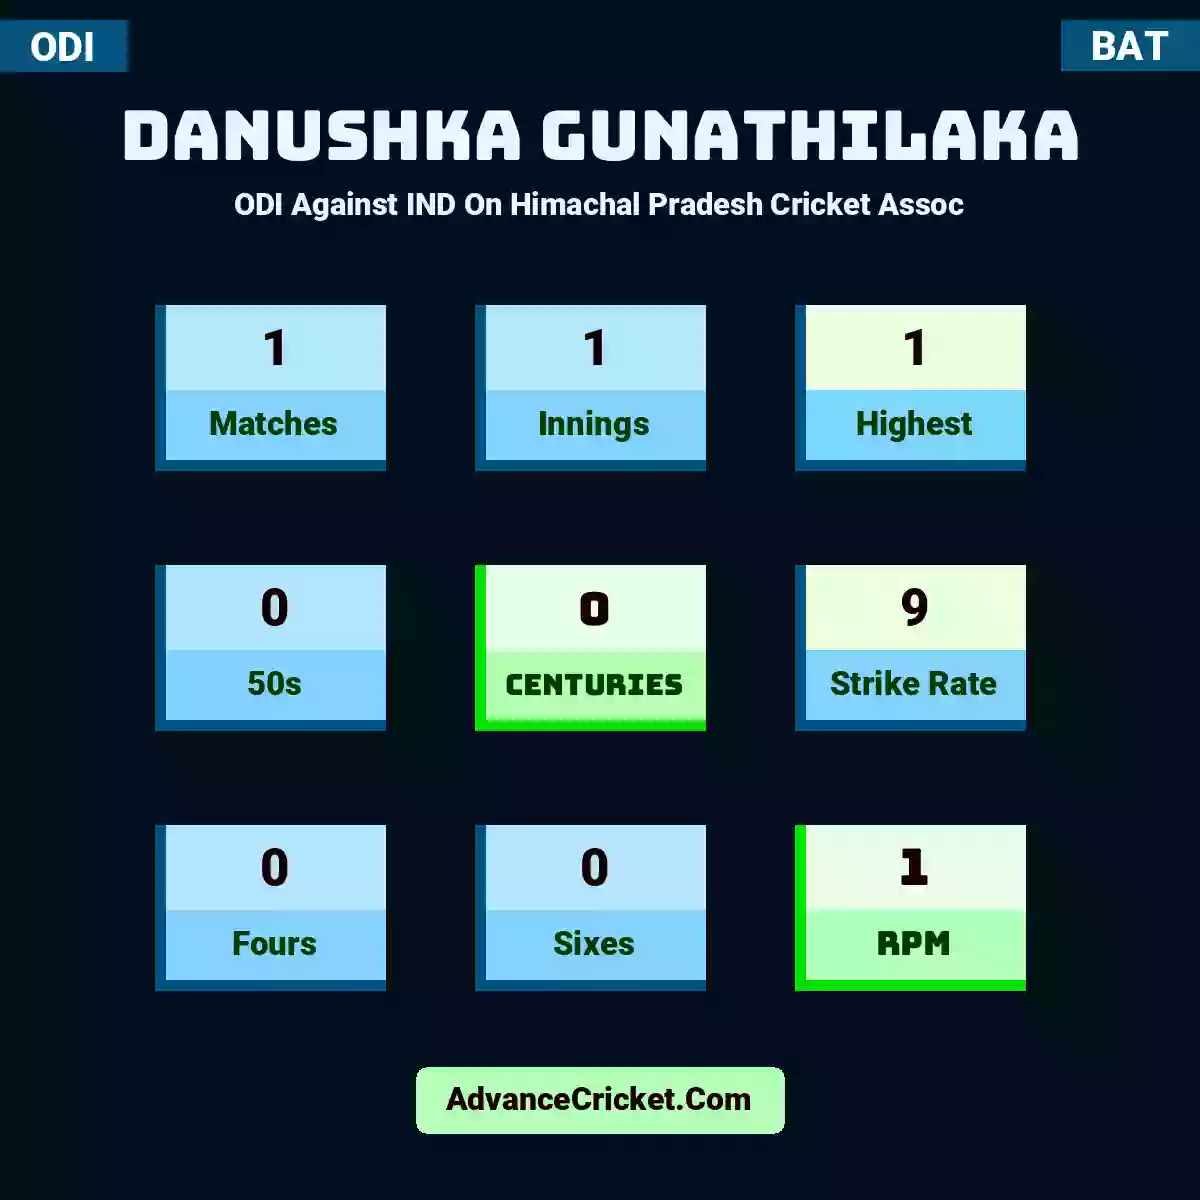 Danushka Gunathilaka ODI  Against IND On Himachal Pradesh Cricket Assoc, Danushka Gunathilaka played 1 matches, scored 1 runs as highest, 0 half-centuries, and 0 centuries, with a strike rate of 9. D.Gunathilaka hit 0 fours and 0 sixes, with an RPM of 1.